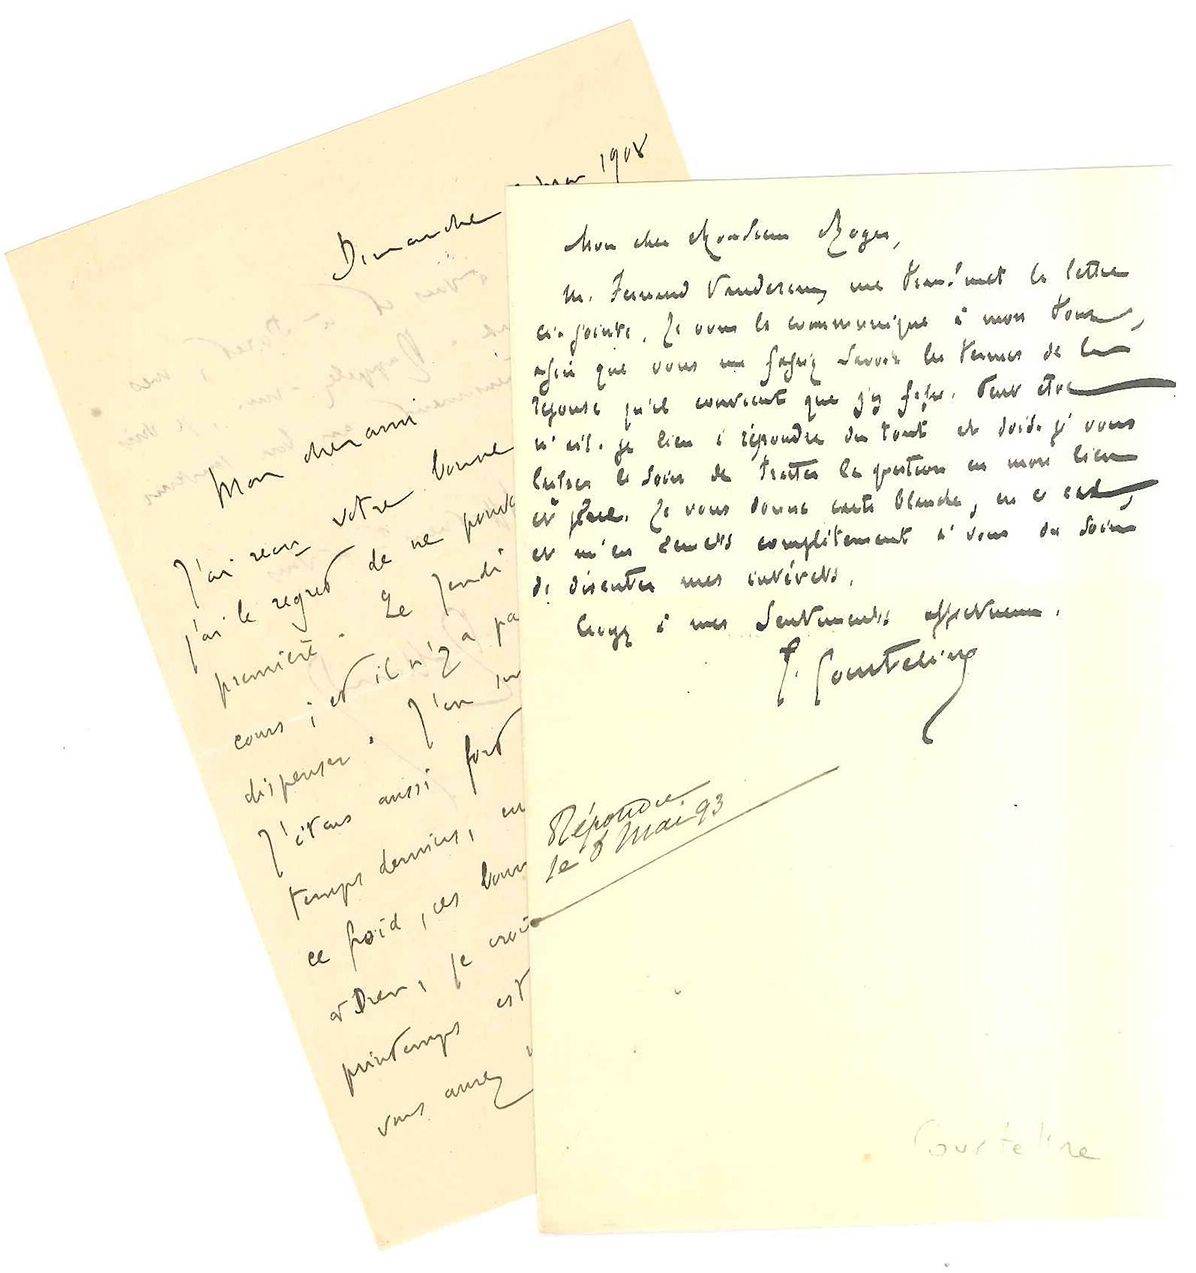 DIVERS 
- Romain ROLLAND，一套6封由不同作者签名的亲笔信。1908年5月3日，签署给一个身份不明的收件人的亲笔信，S. L.。
- Tr&hellip;